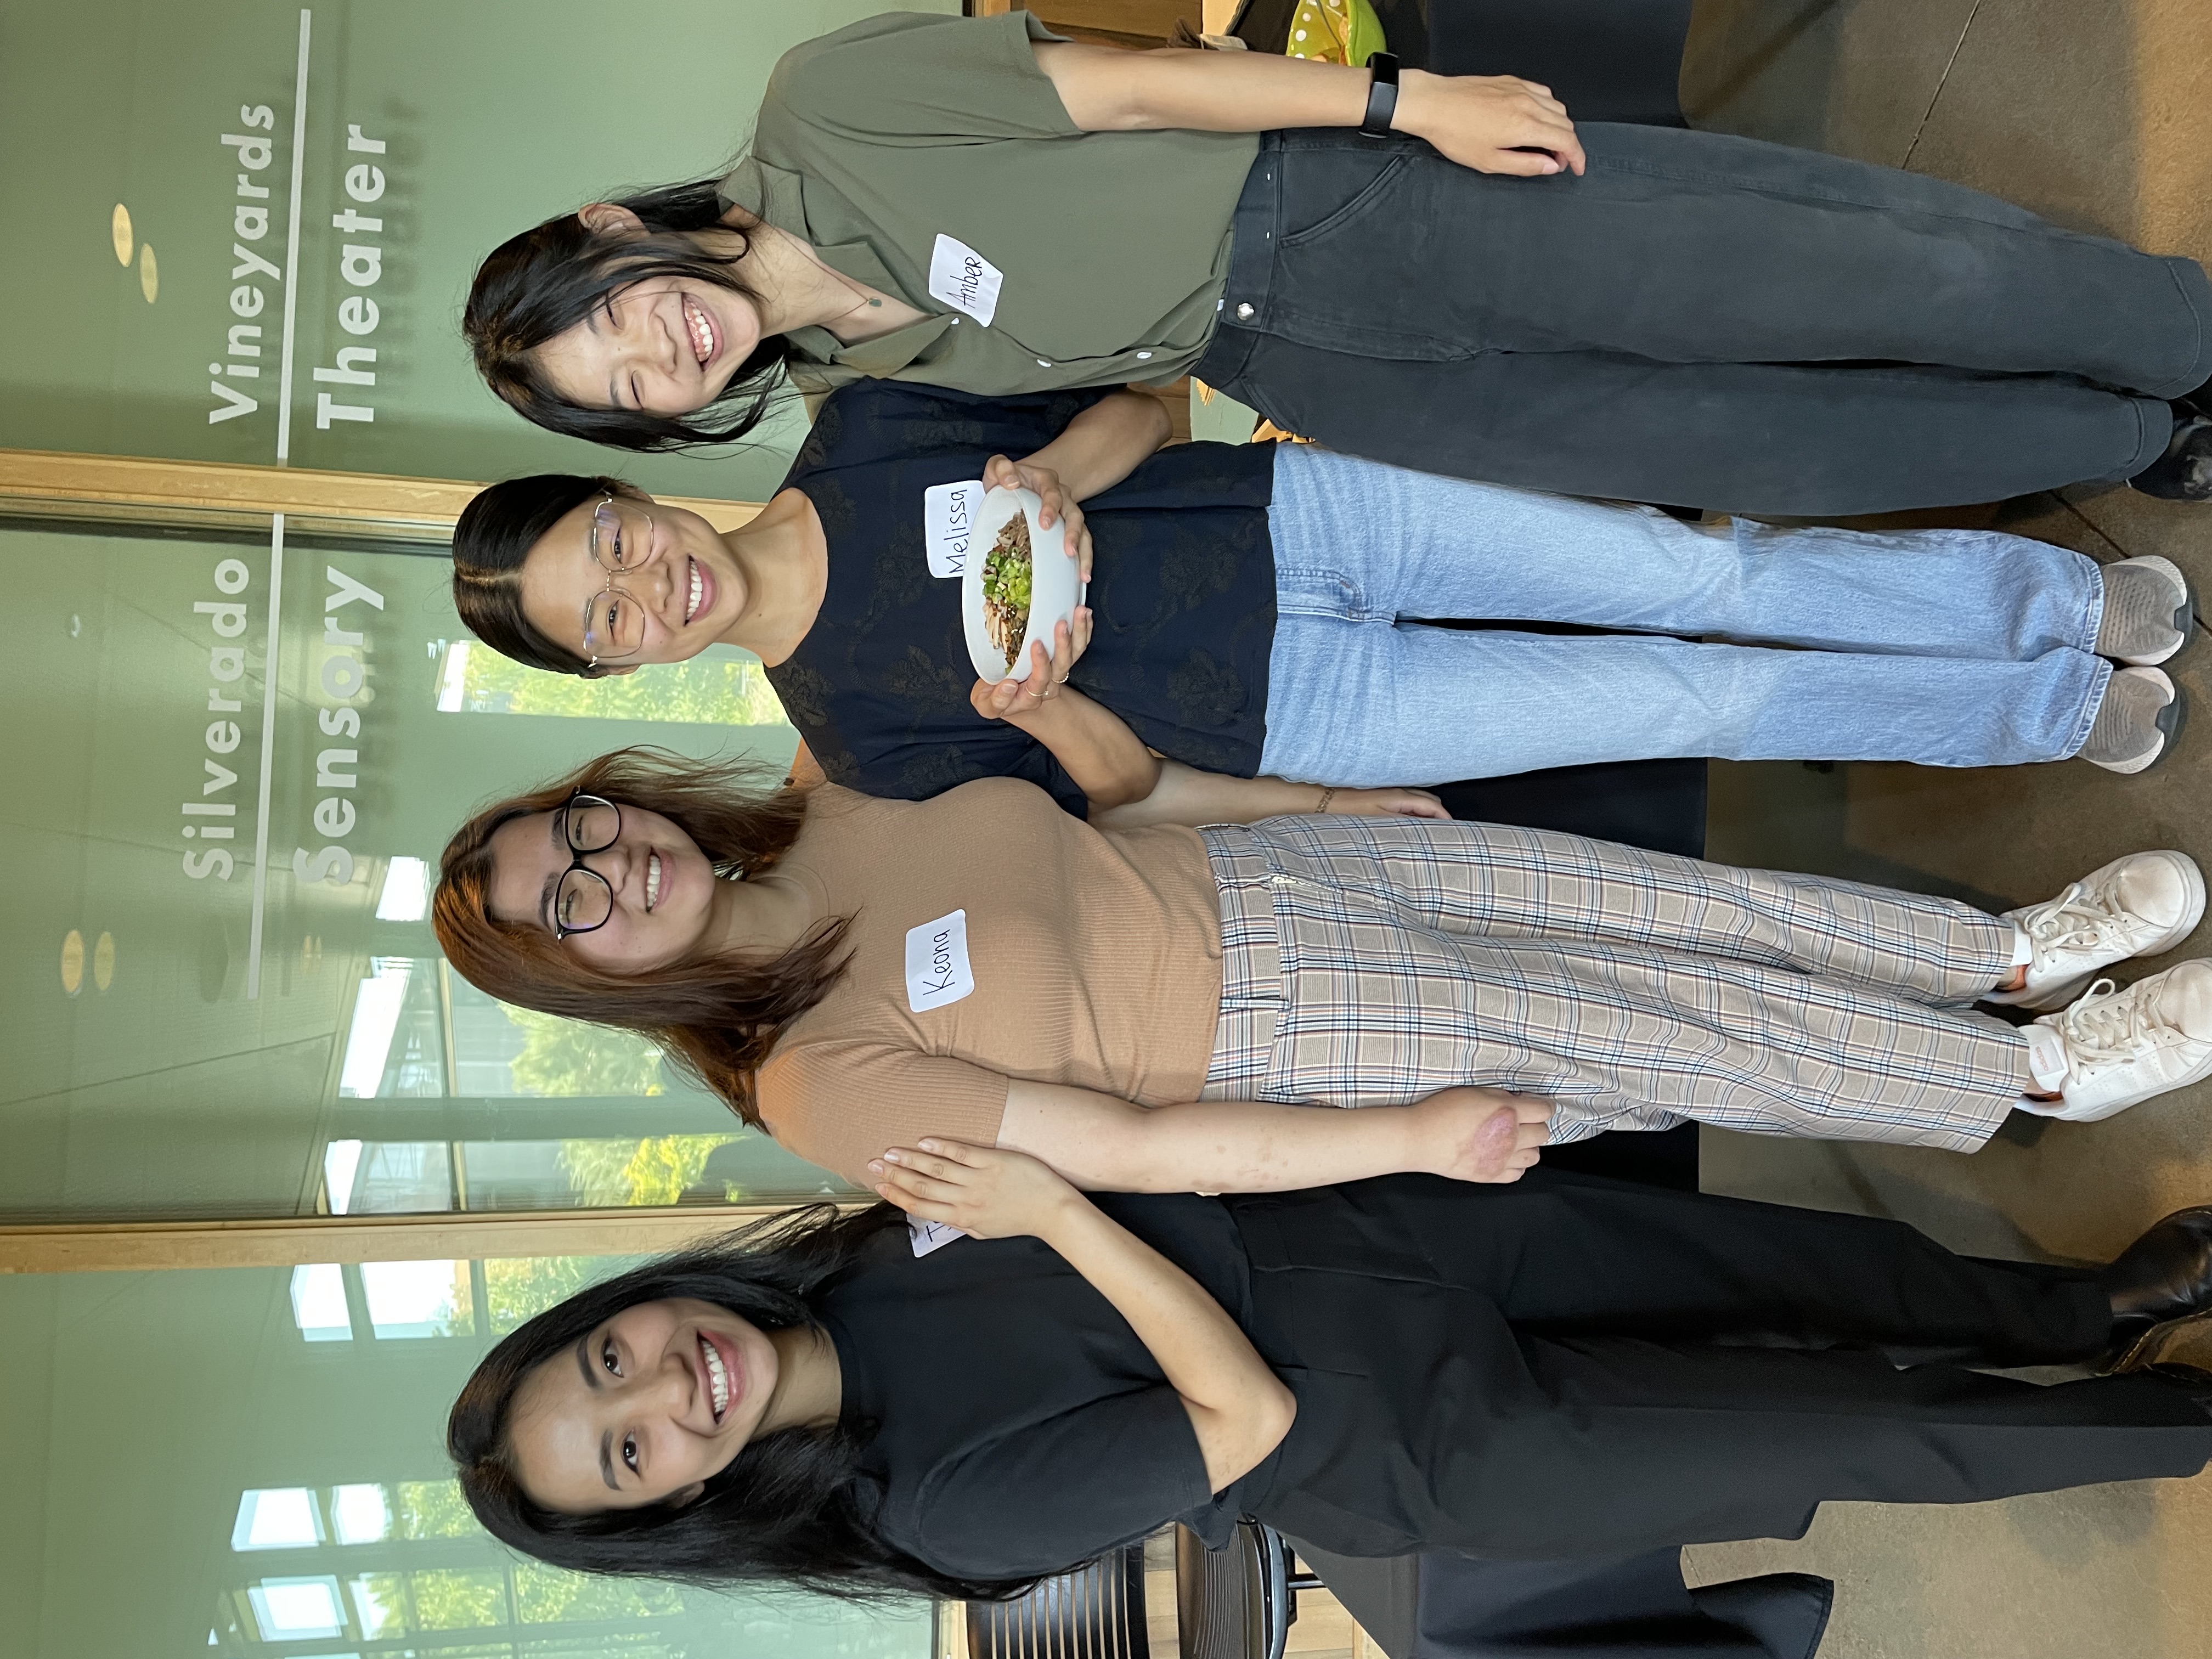 “UPnoodle" creators Joelle Nguyen, Keona Kanthatham, Melissa Huang and Amber Sun